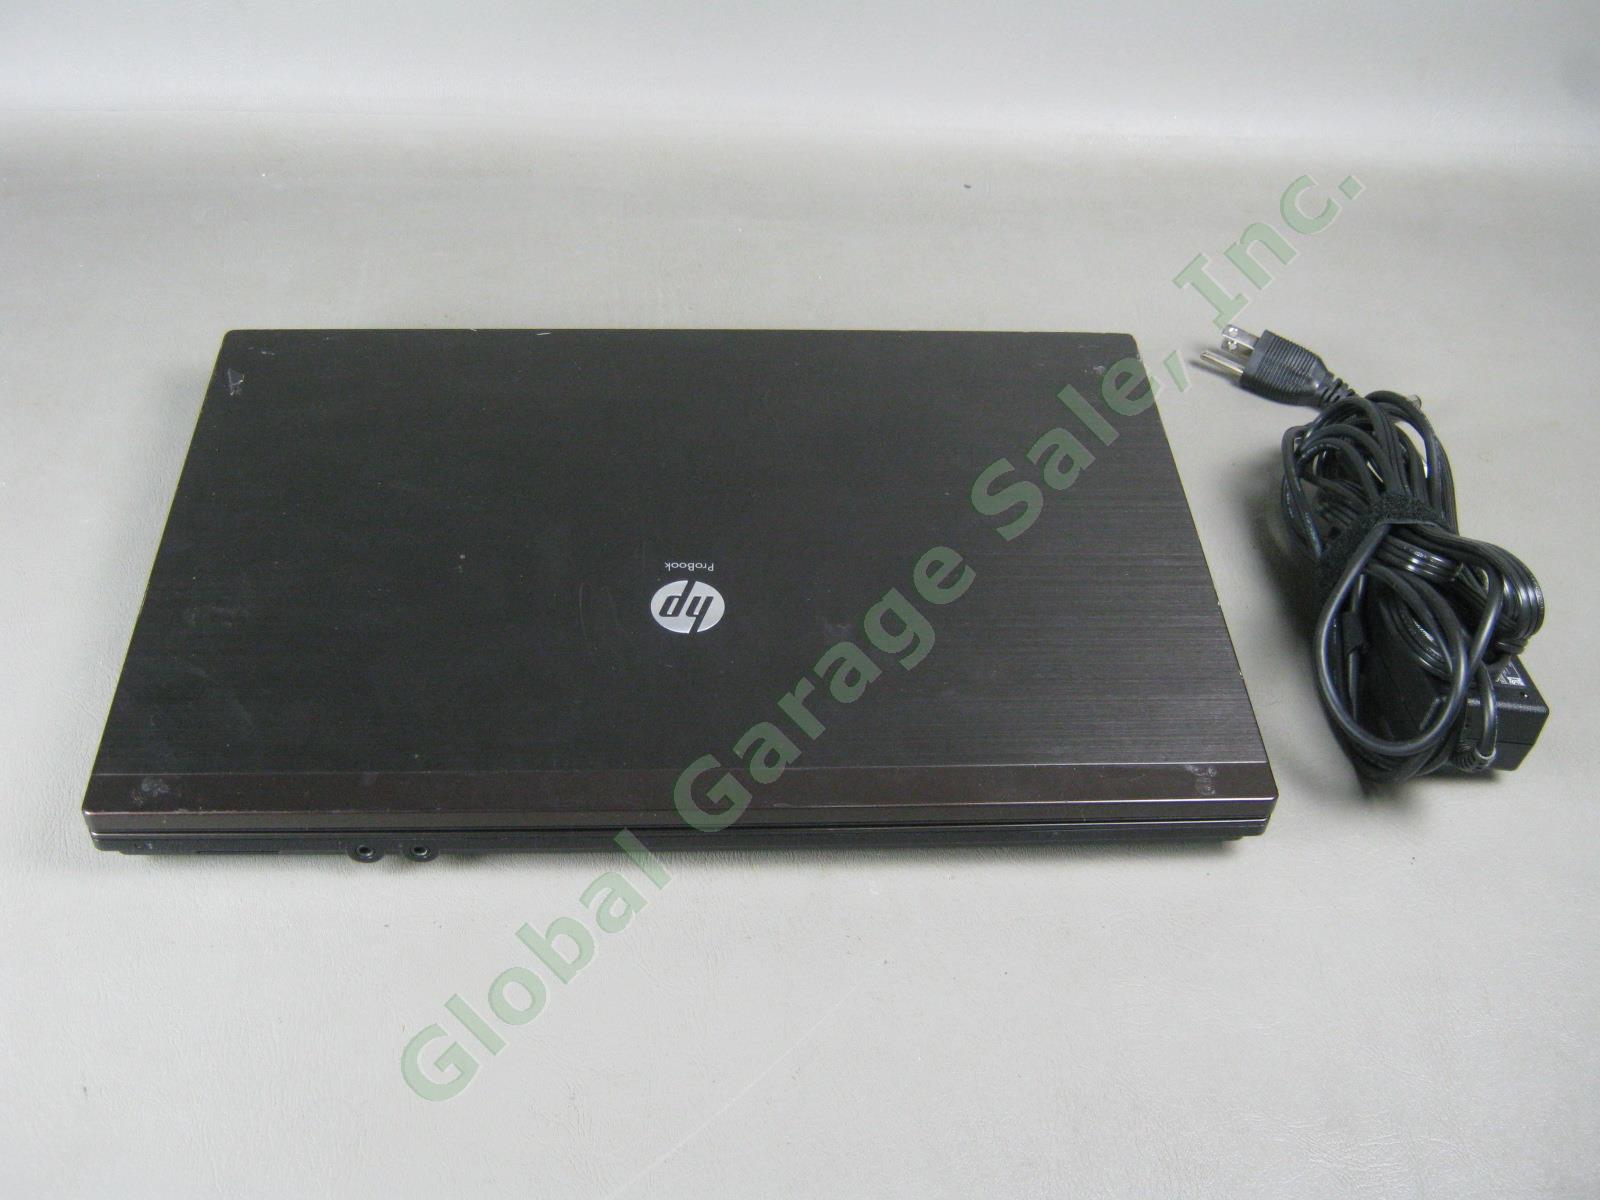 HP 4520s ProBook Laptop Intel Core i5 M520 2.67GHz 4GB 232GB DVDRW Wind 7 Pro NR 3